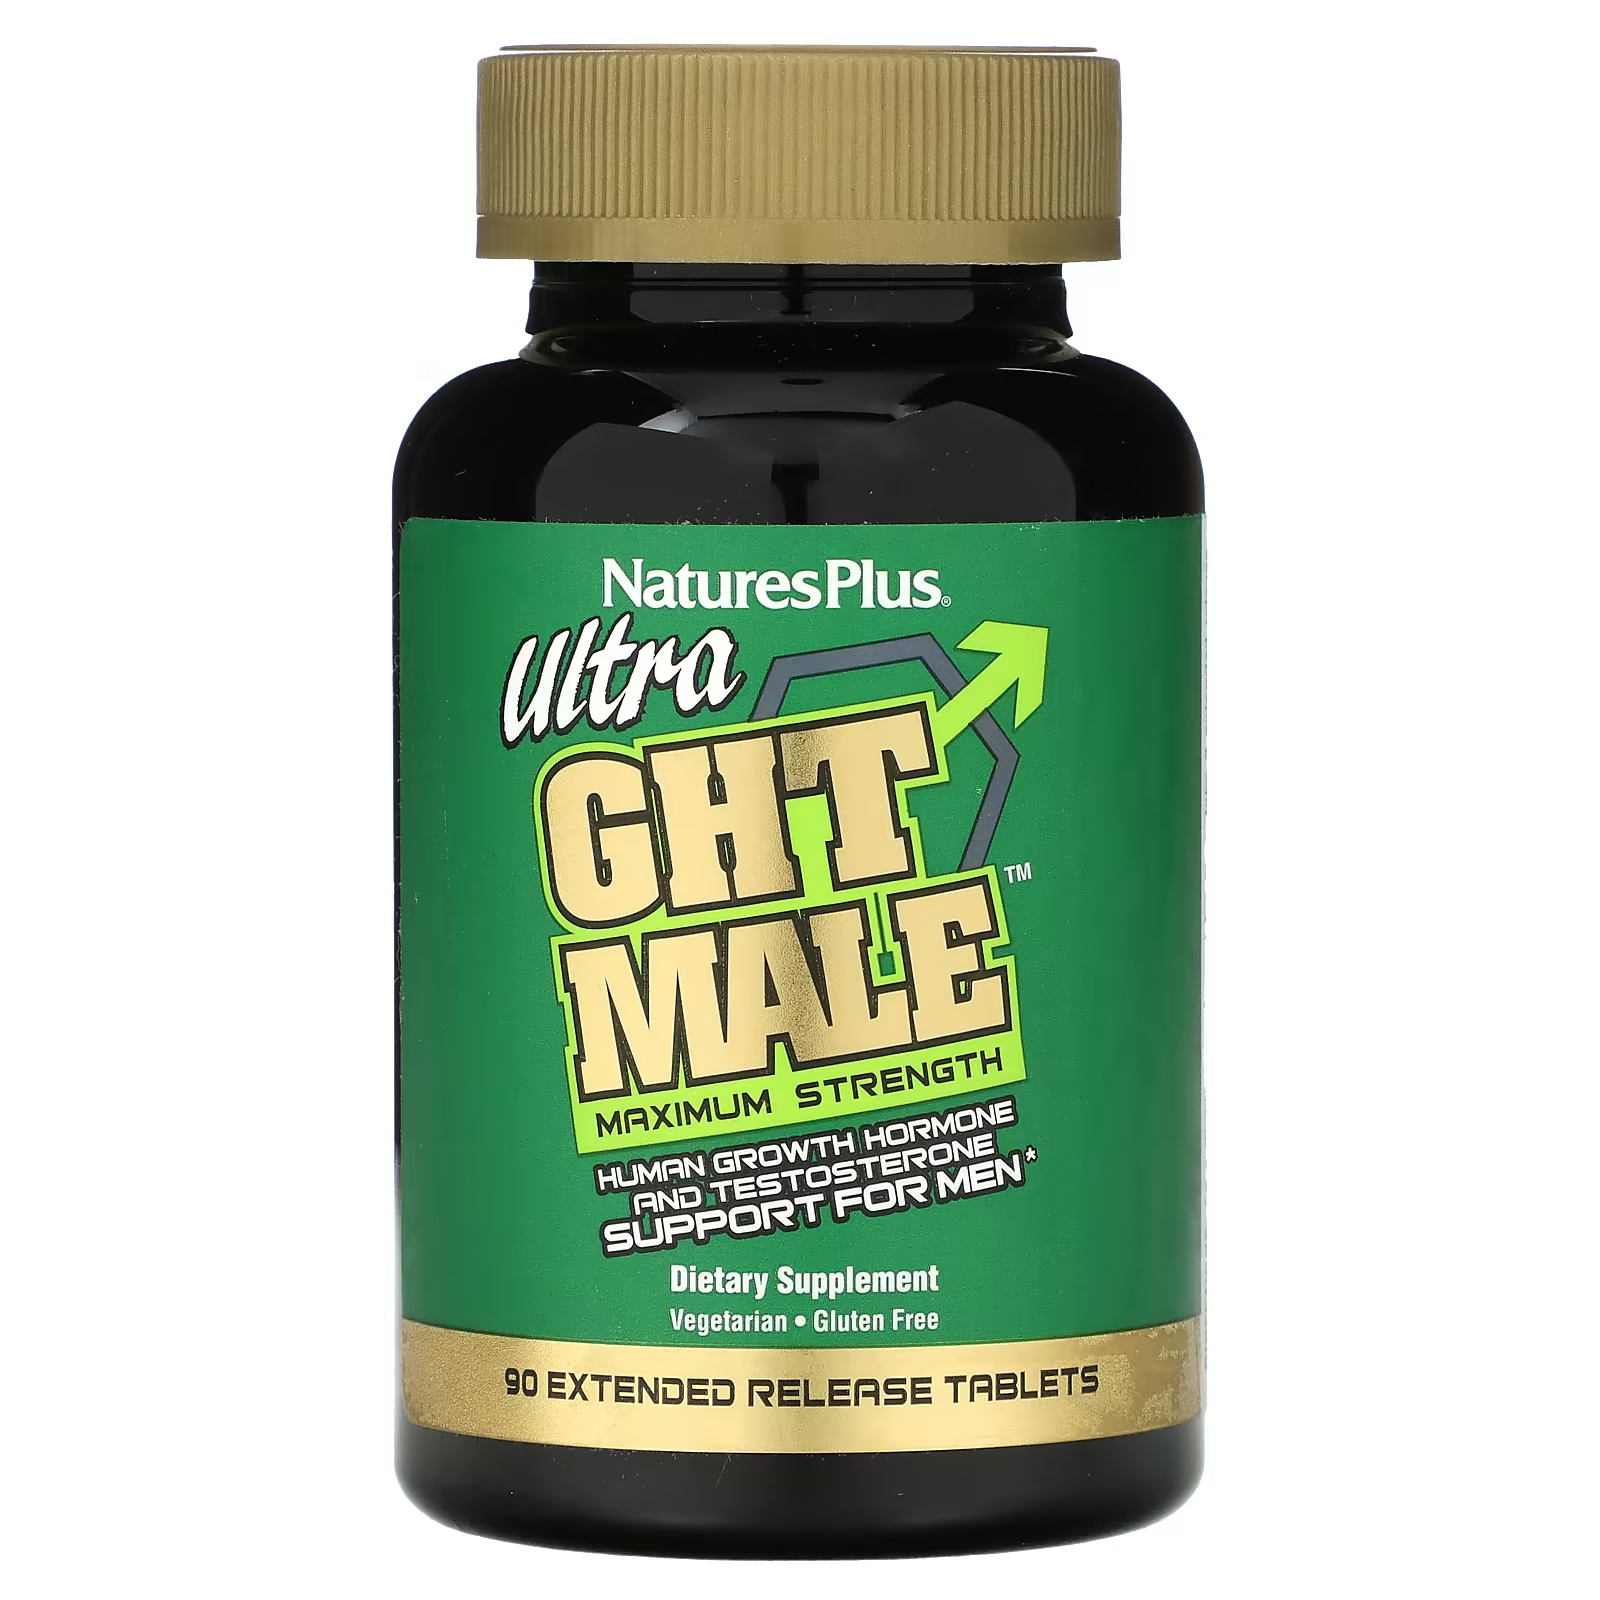 Пищевая добавка NaturesPlus Ultra GHT Male для мужчин, 90 таблеток